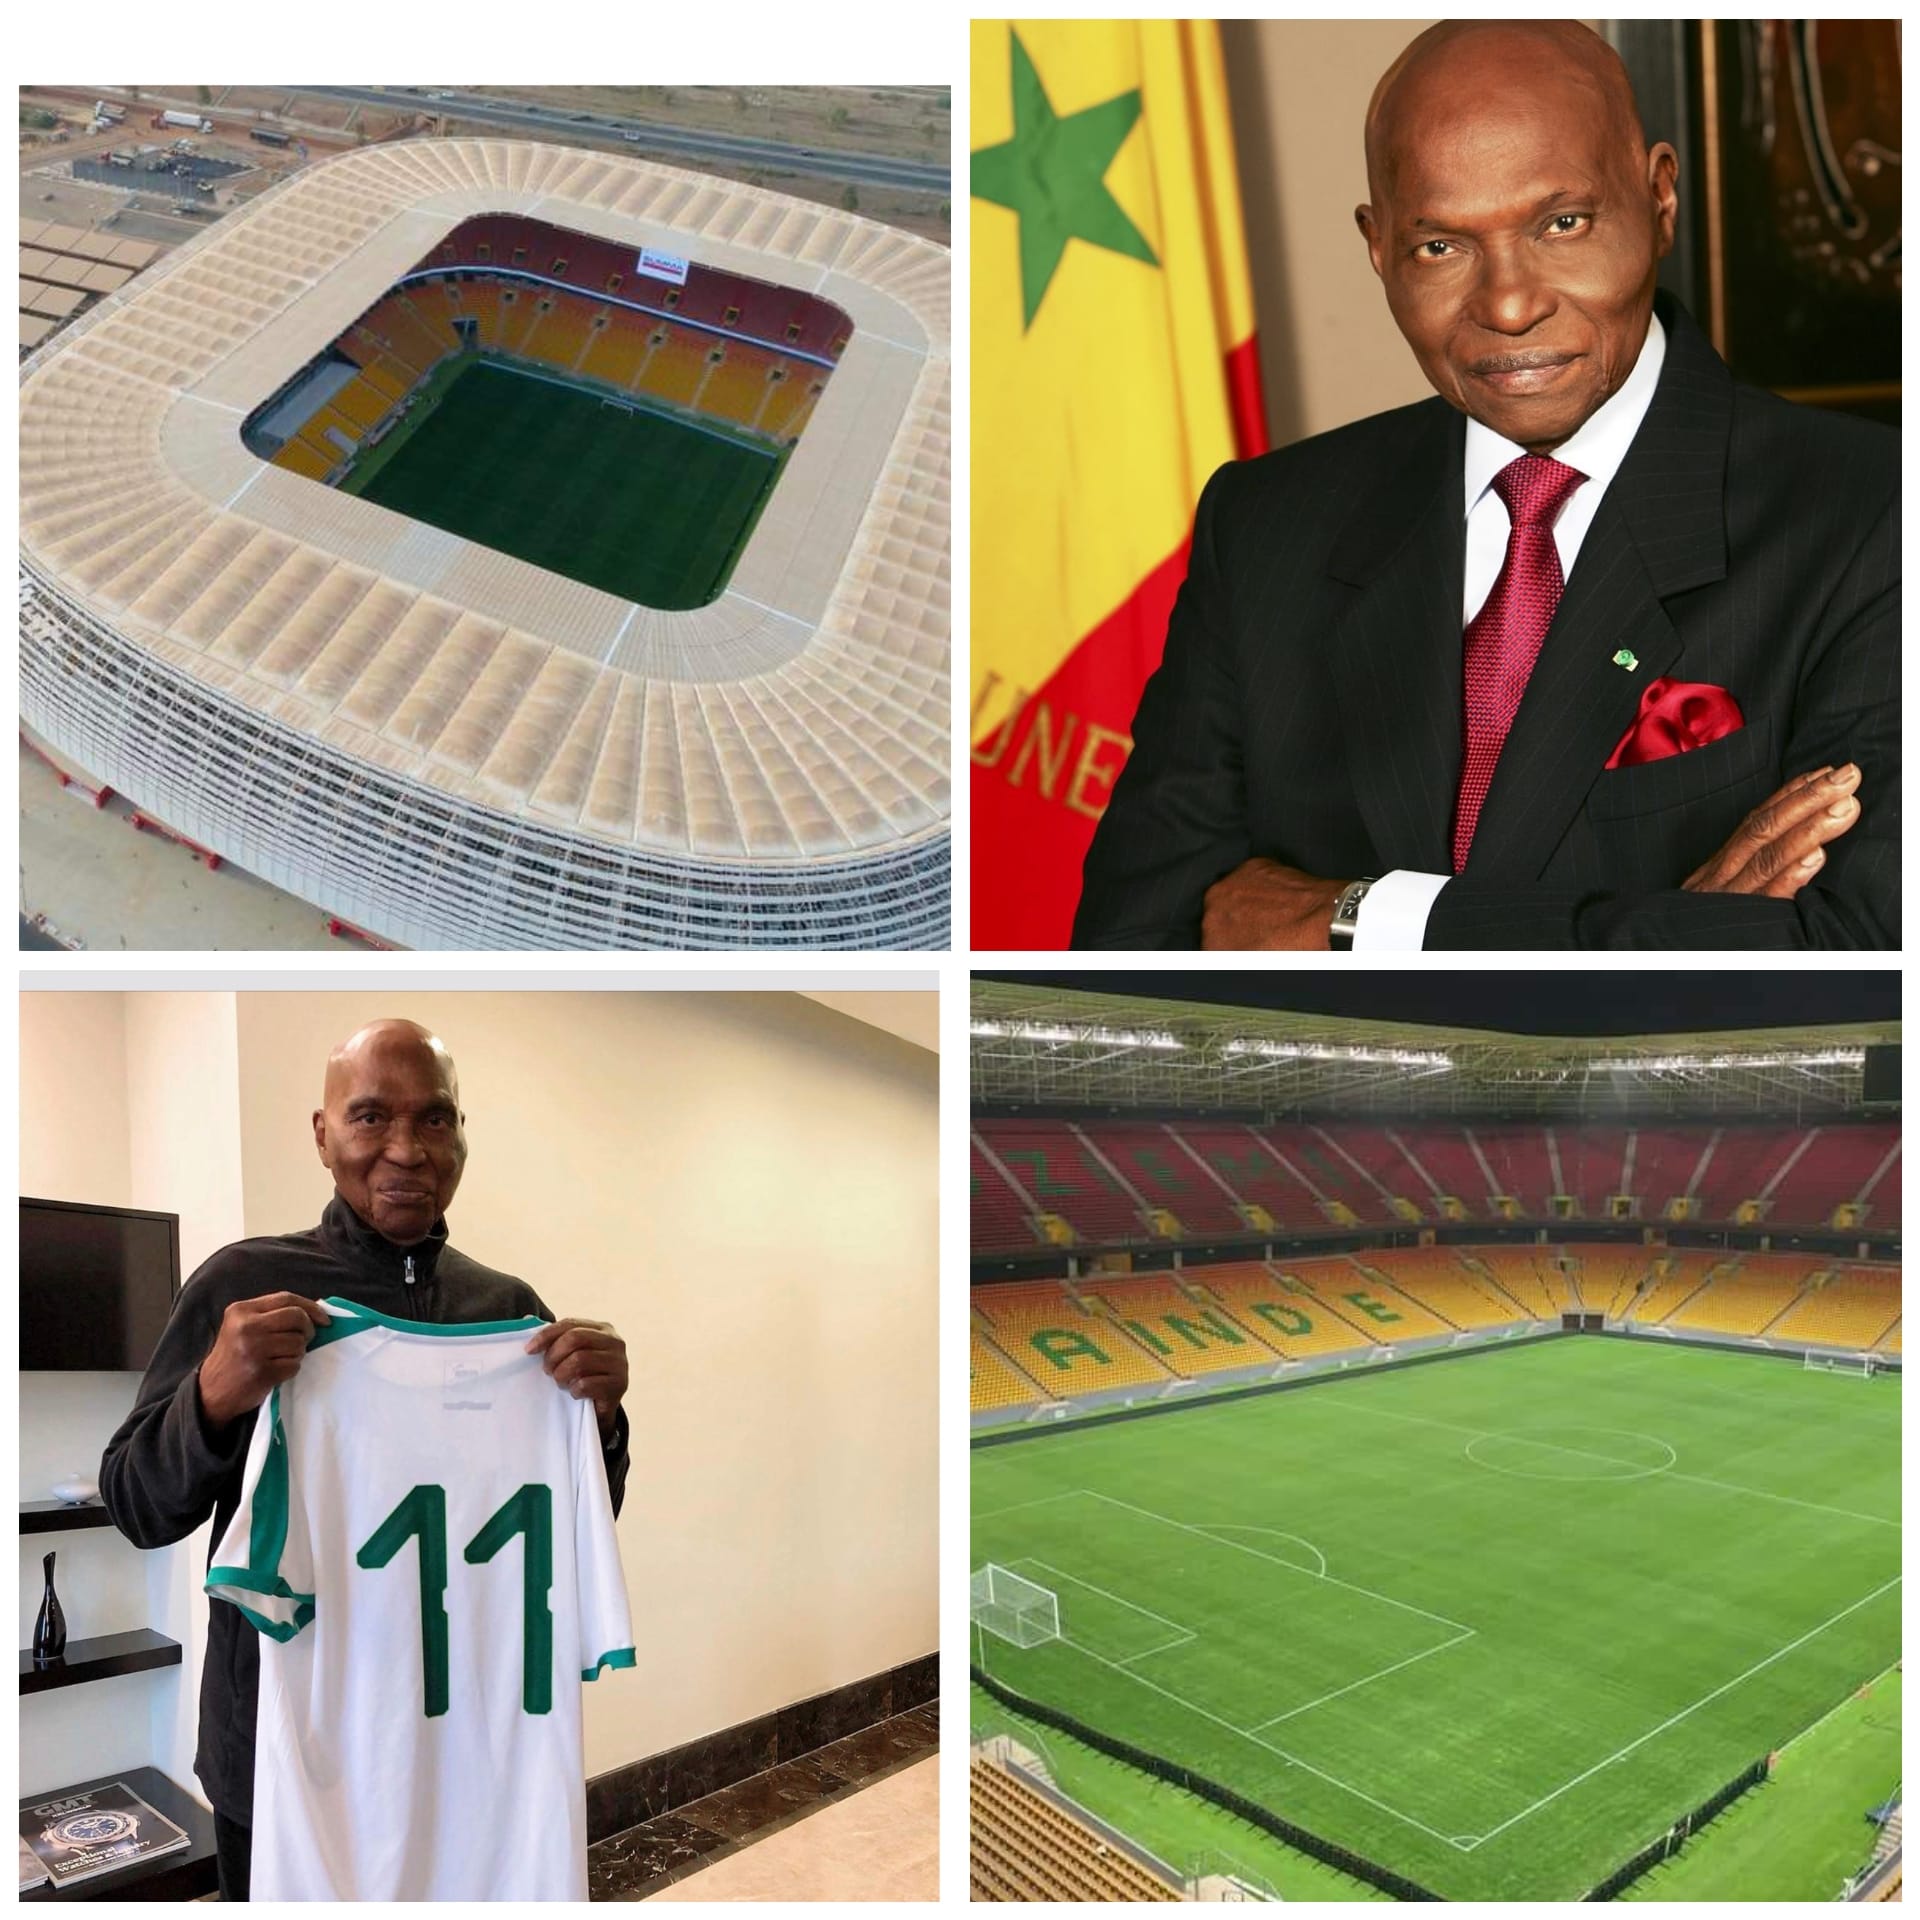 Le stade du Sénégal s’appellera Abdoulaye Wade